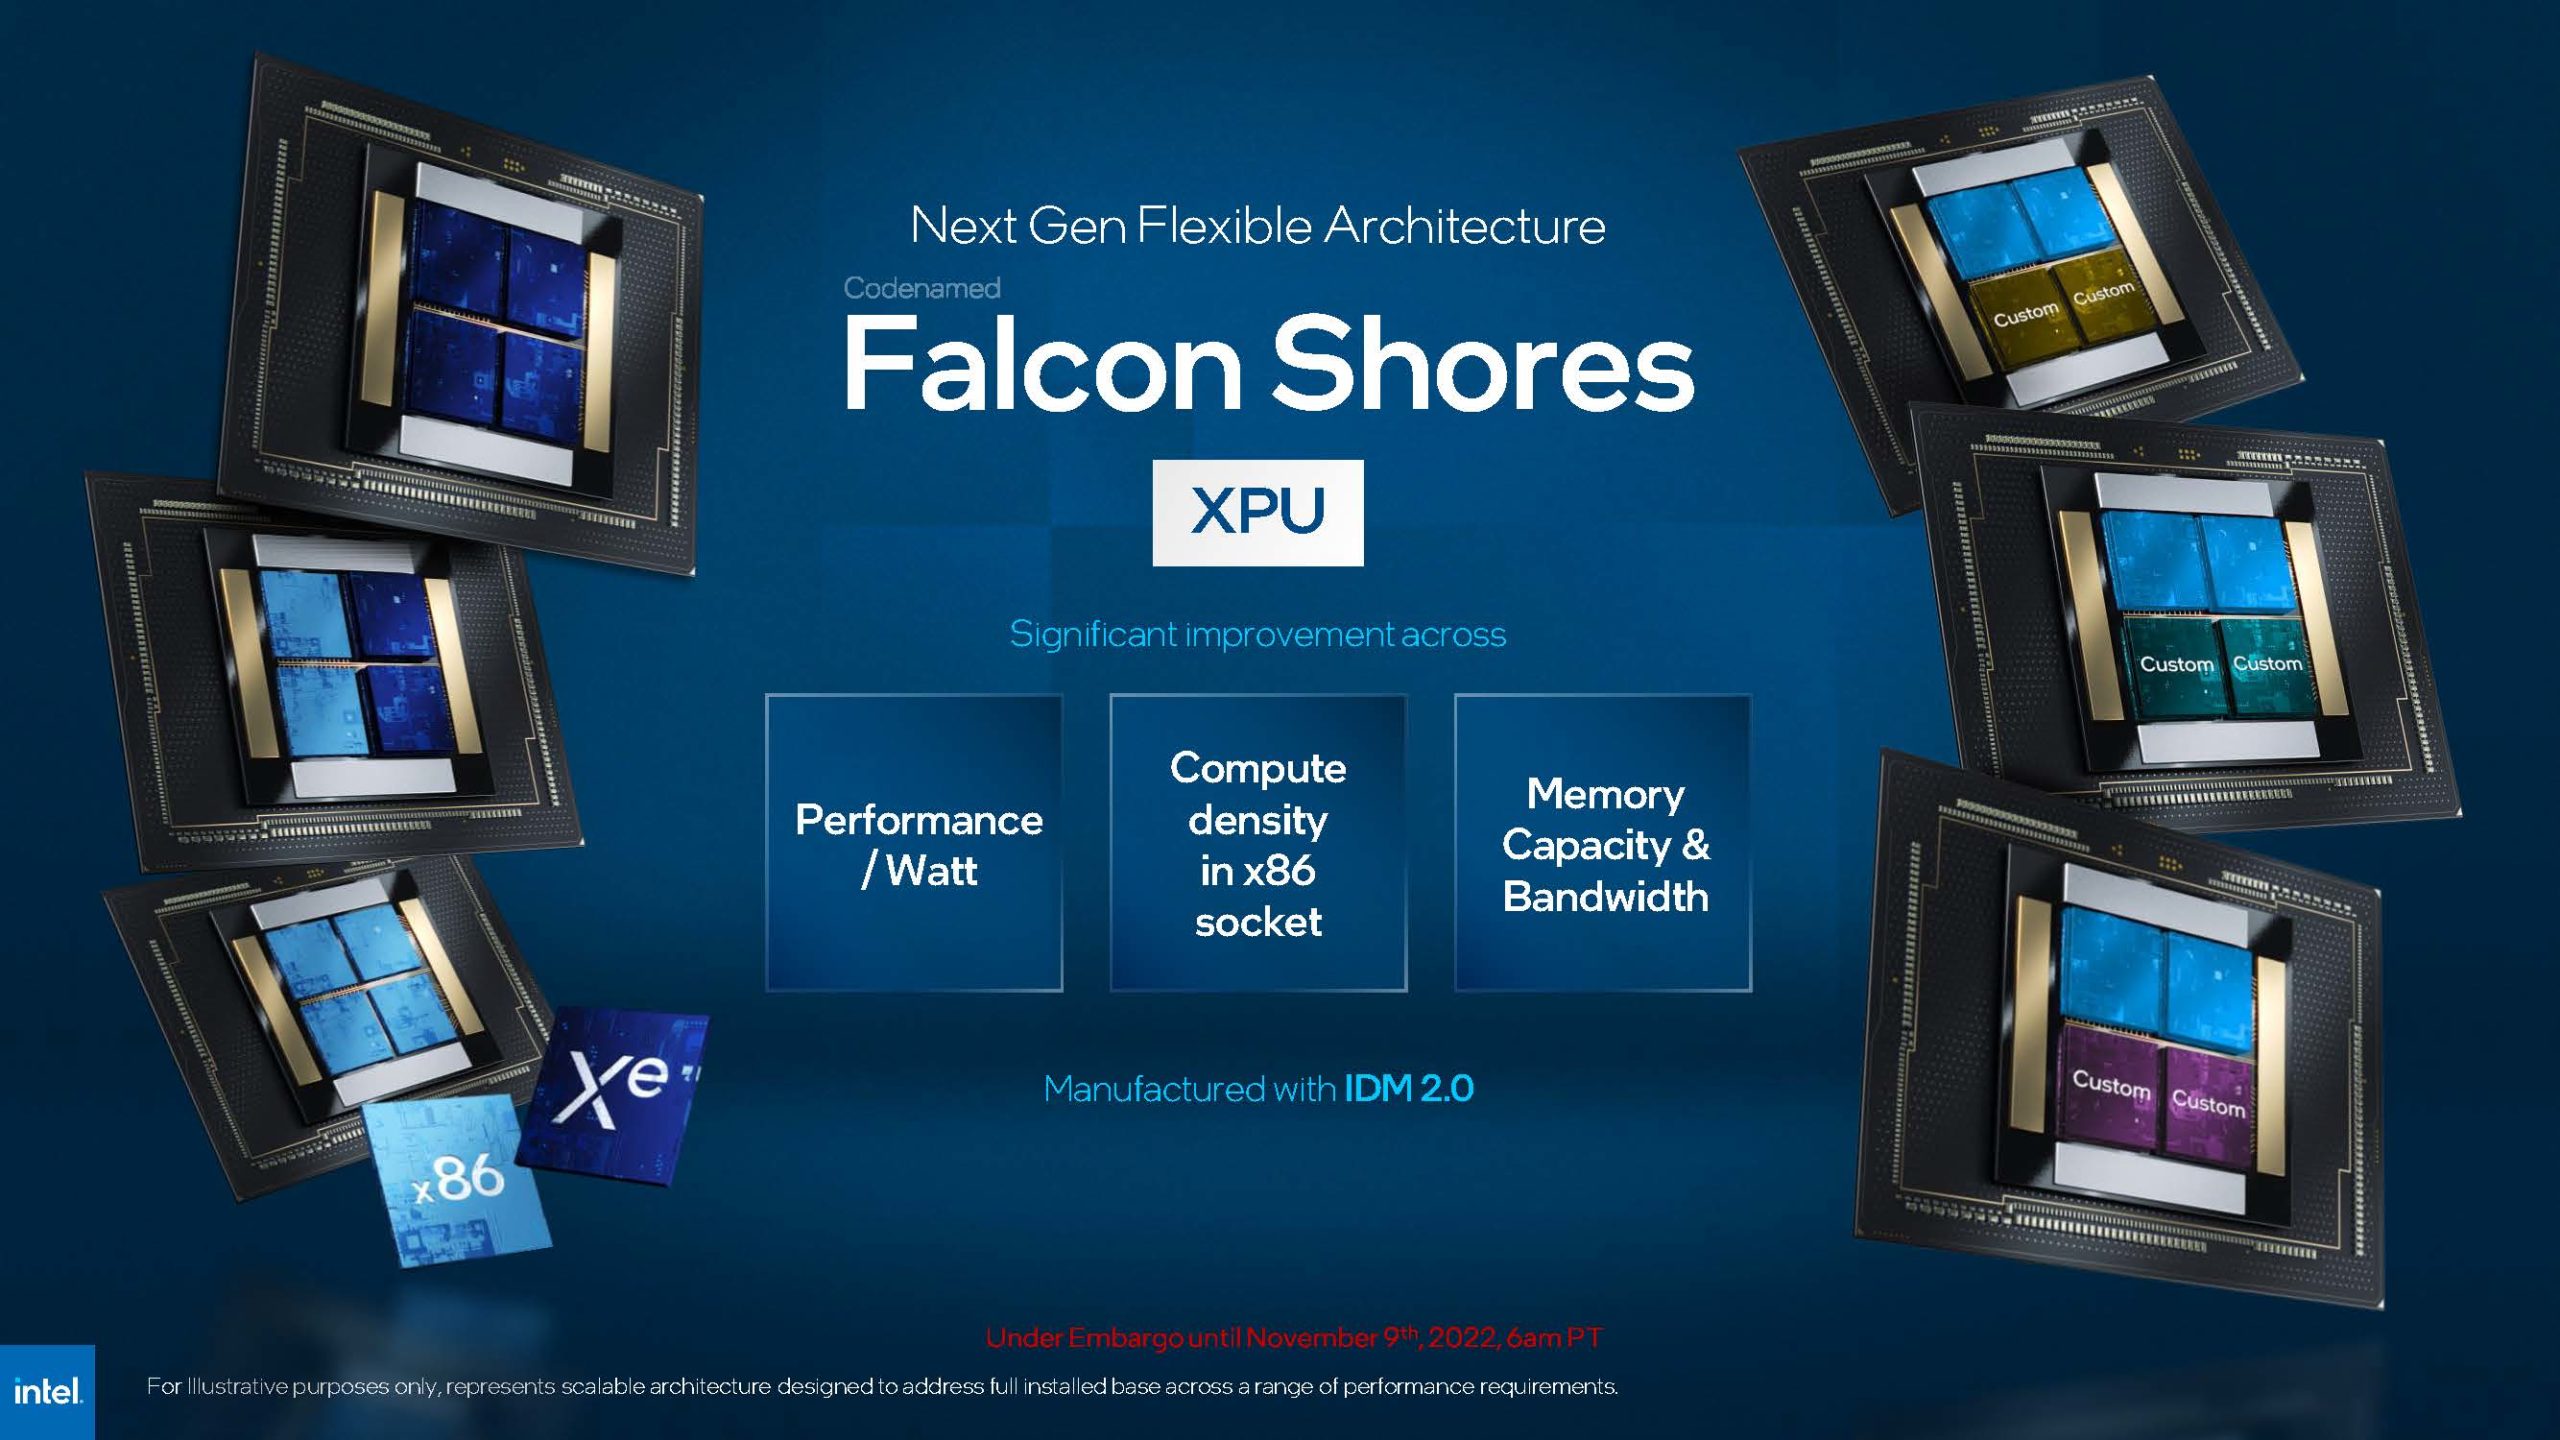 Intel SC22 Intel Falcon Shores Overview